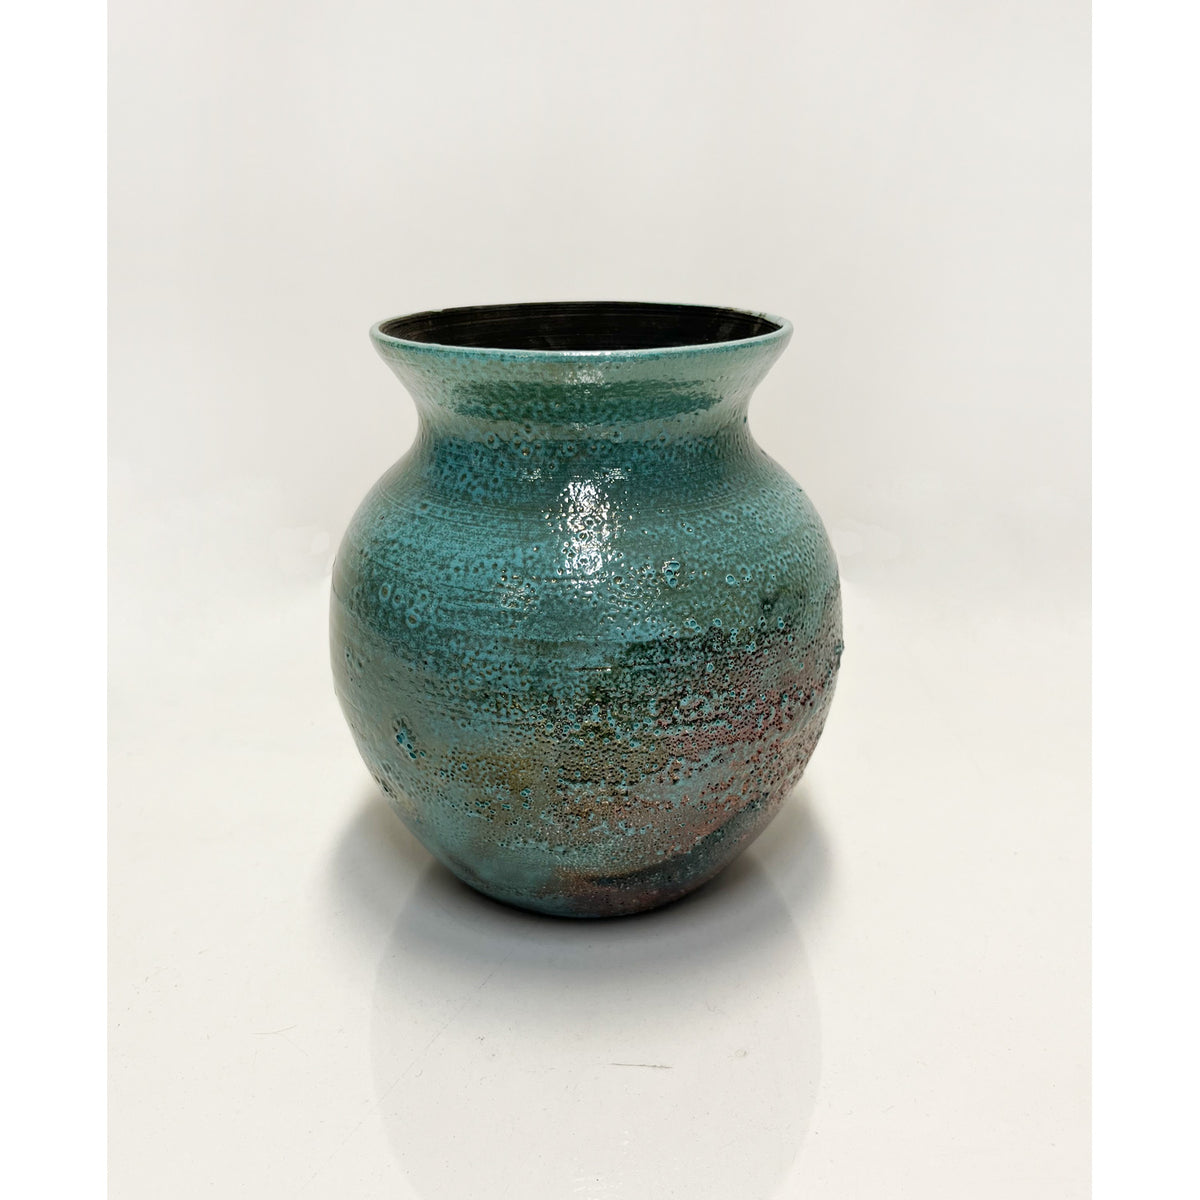 Catherine Harasymiw - Round Green Vase, 5.5" x 4.5" x 4.5"